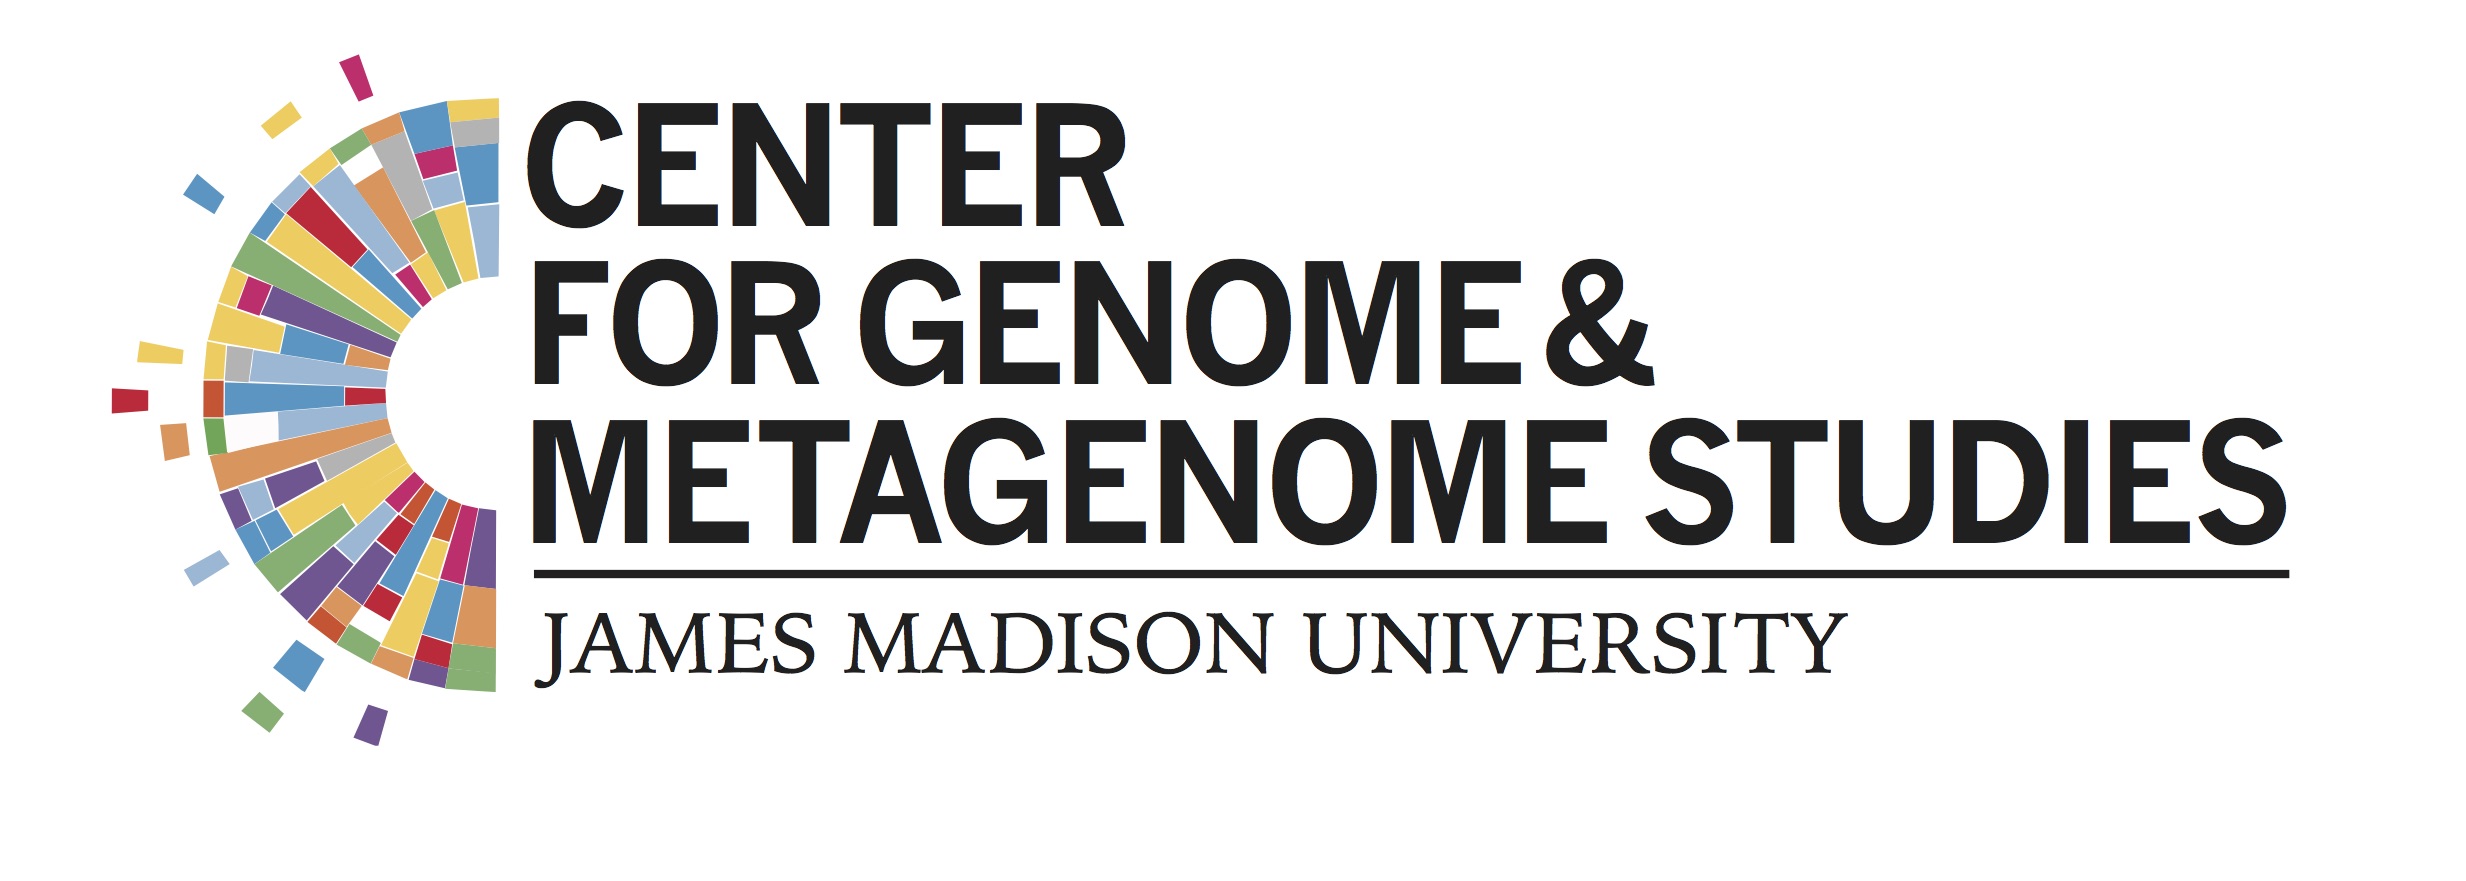 genomics-logo.jpg